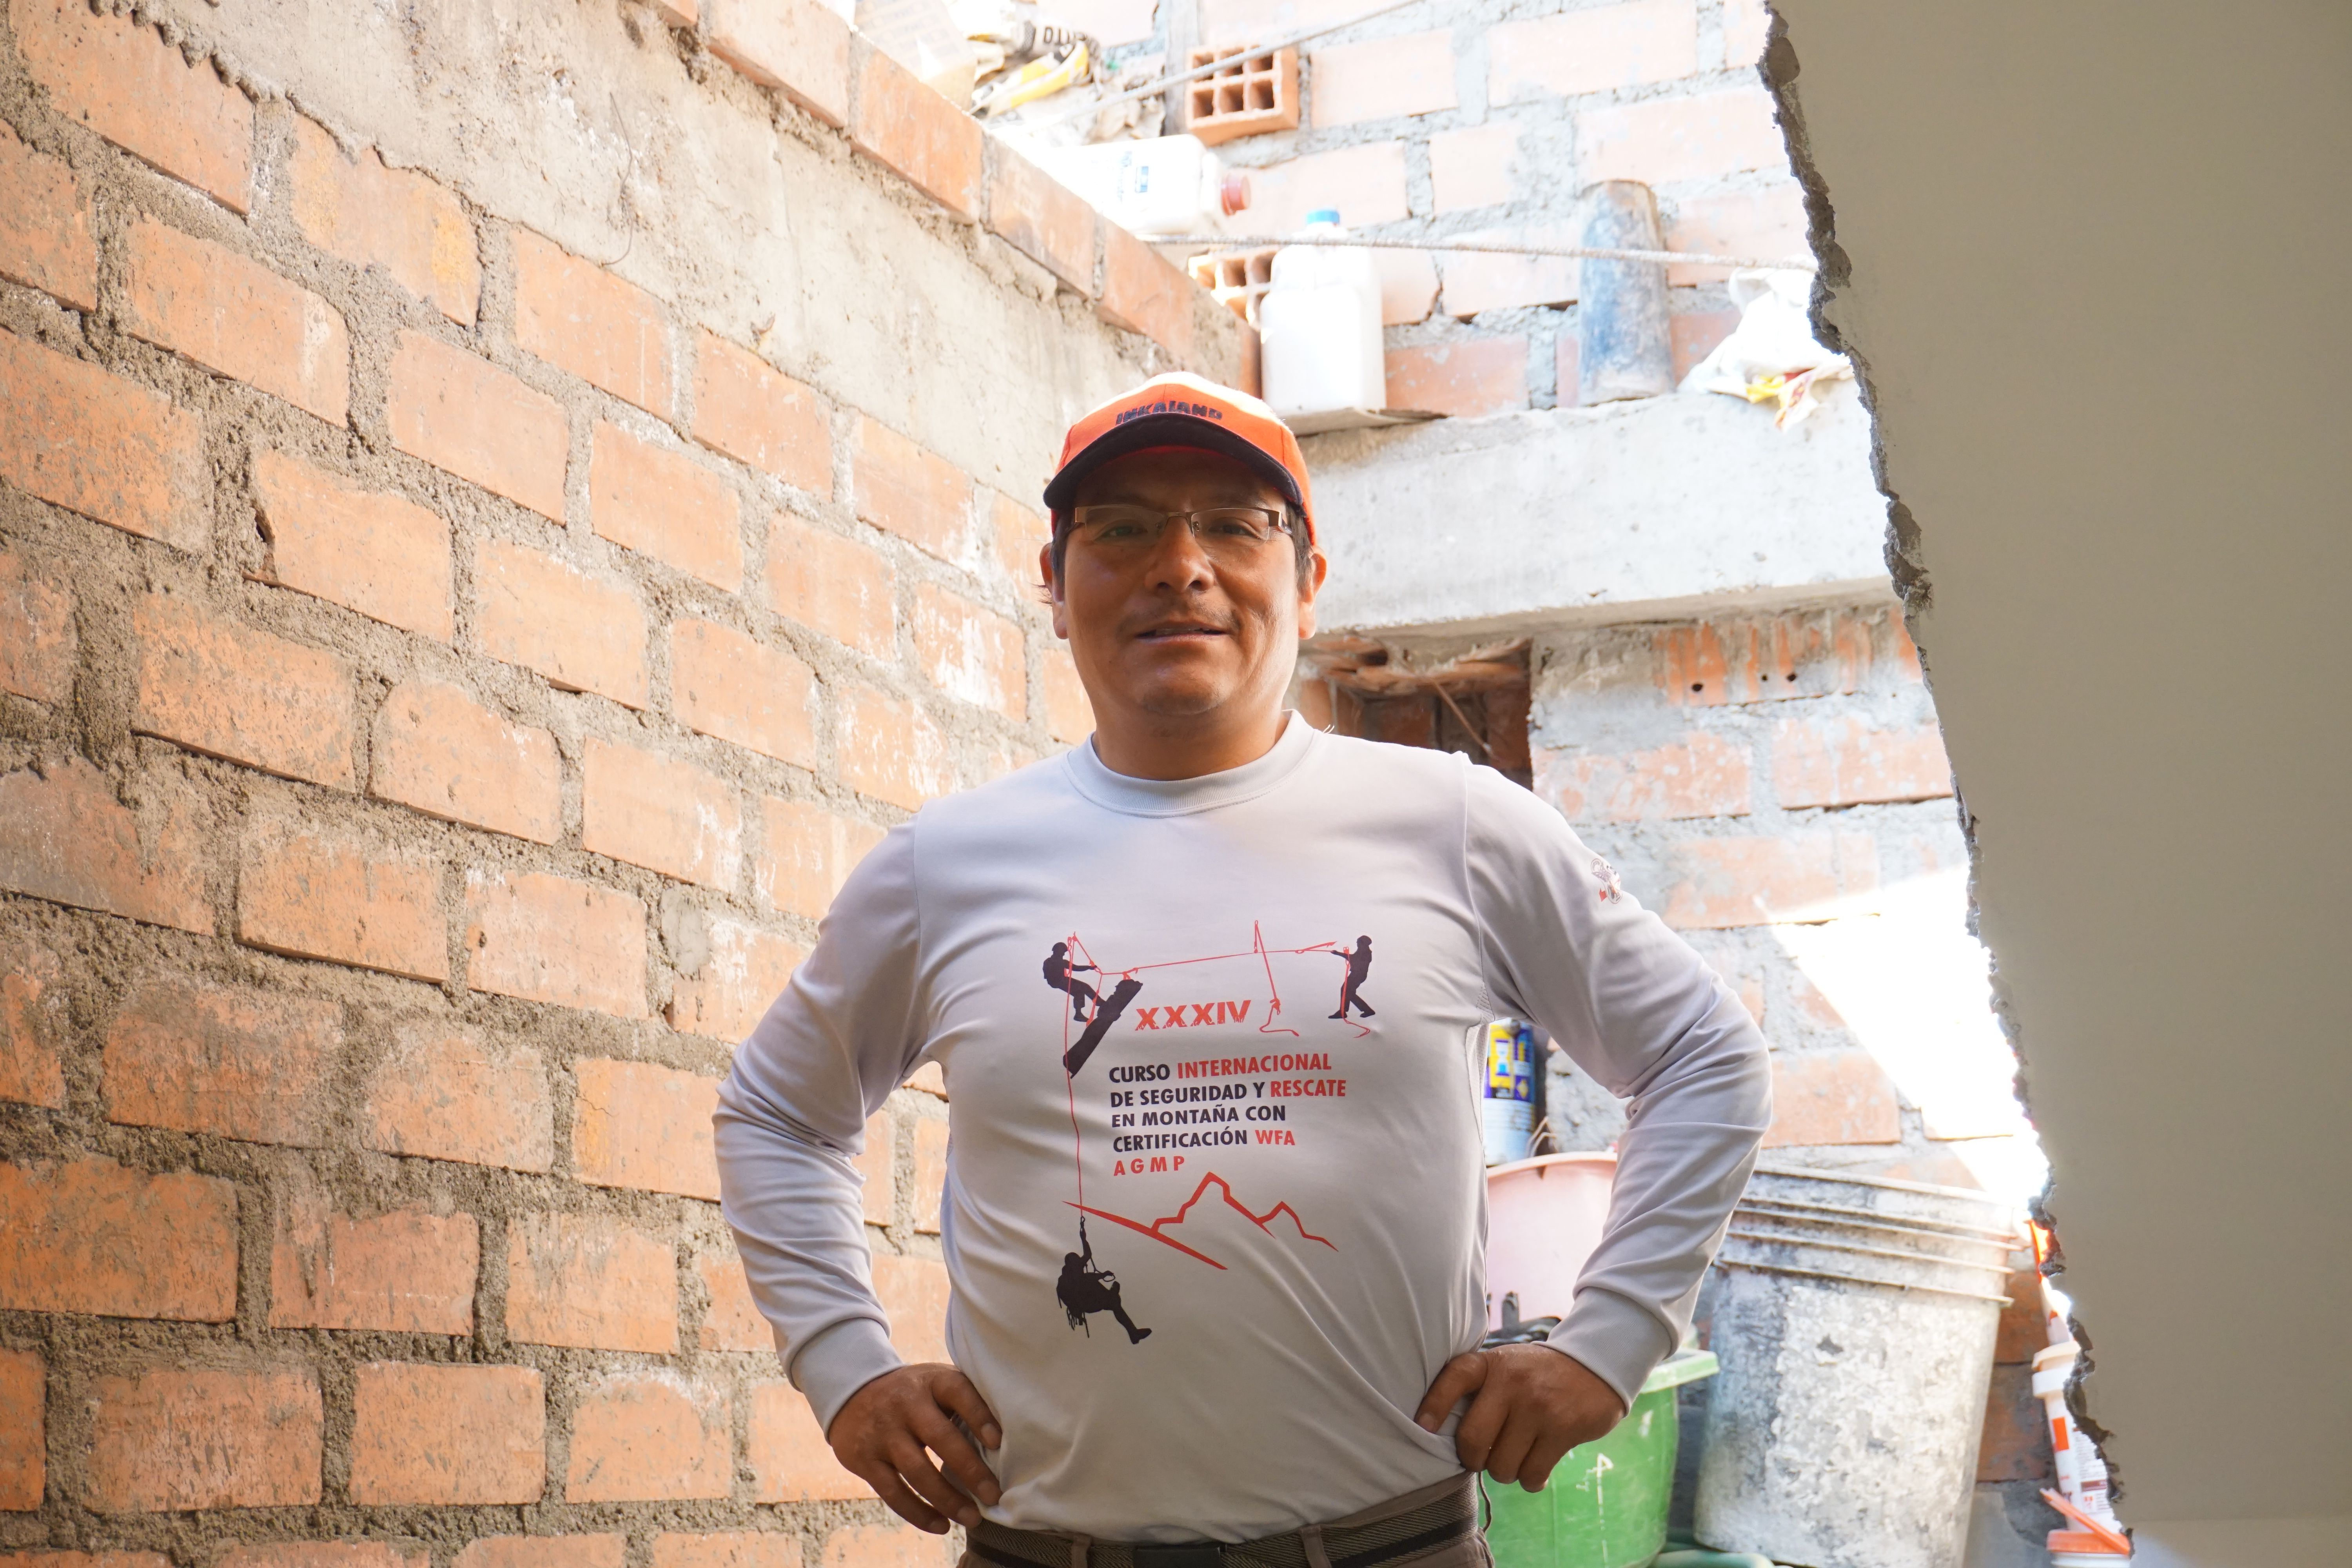 Saul Lliyua, farmer and mountain guide. Image by Audrey Fromson. Peru, 2019.